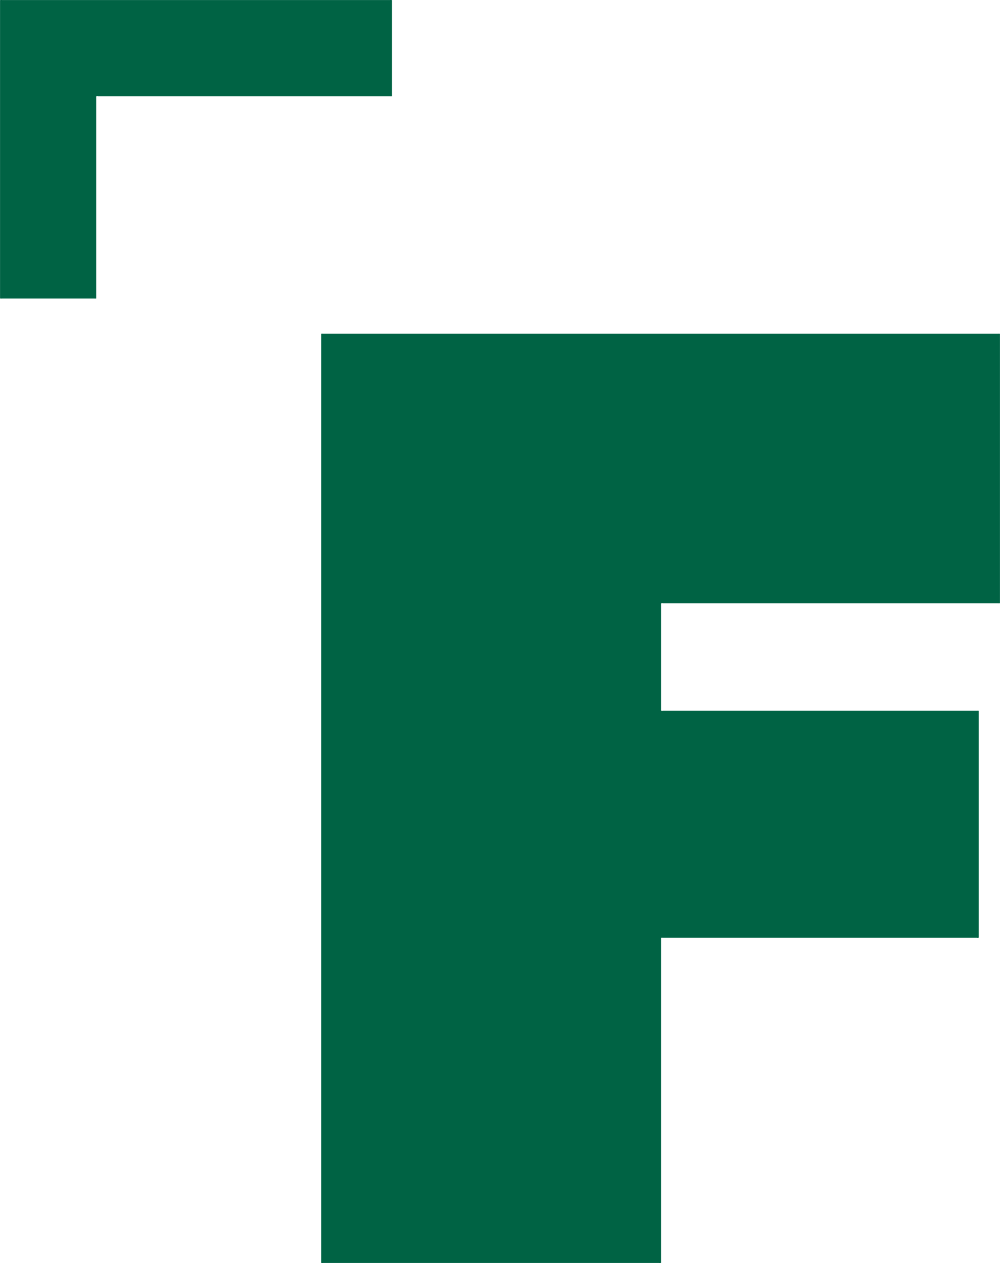 Fermanbau Logo